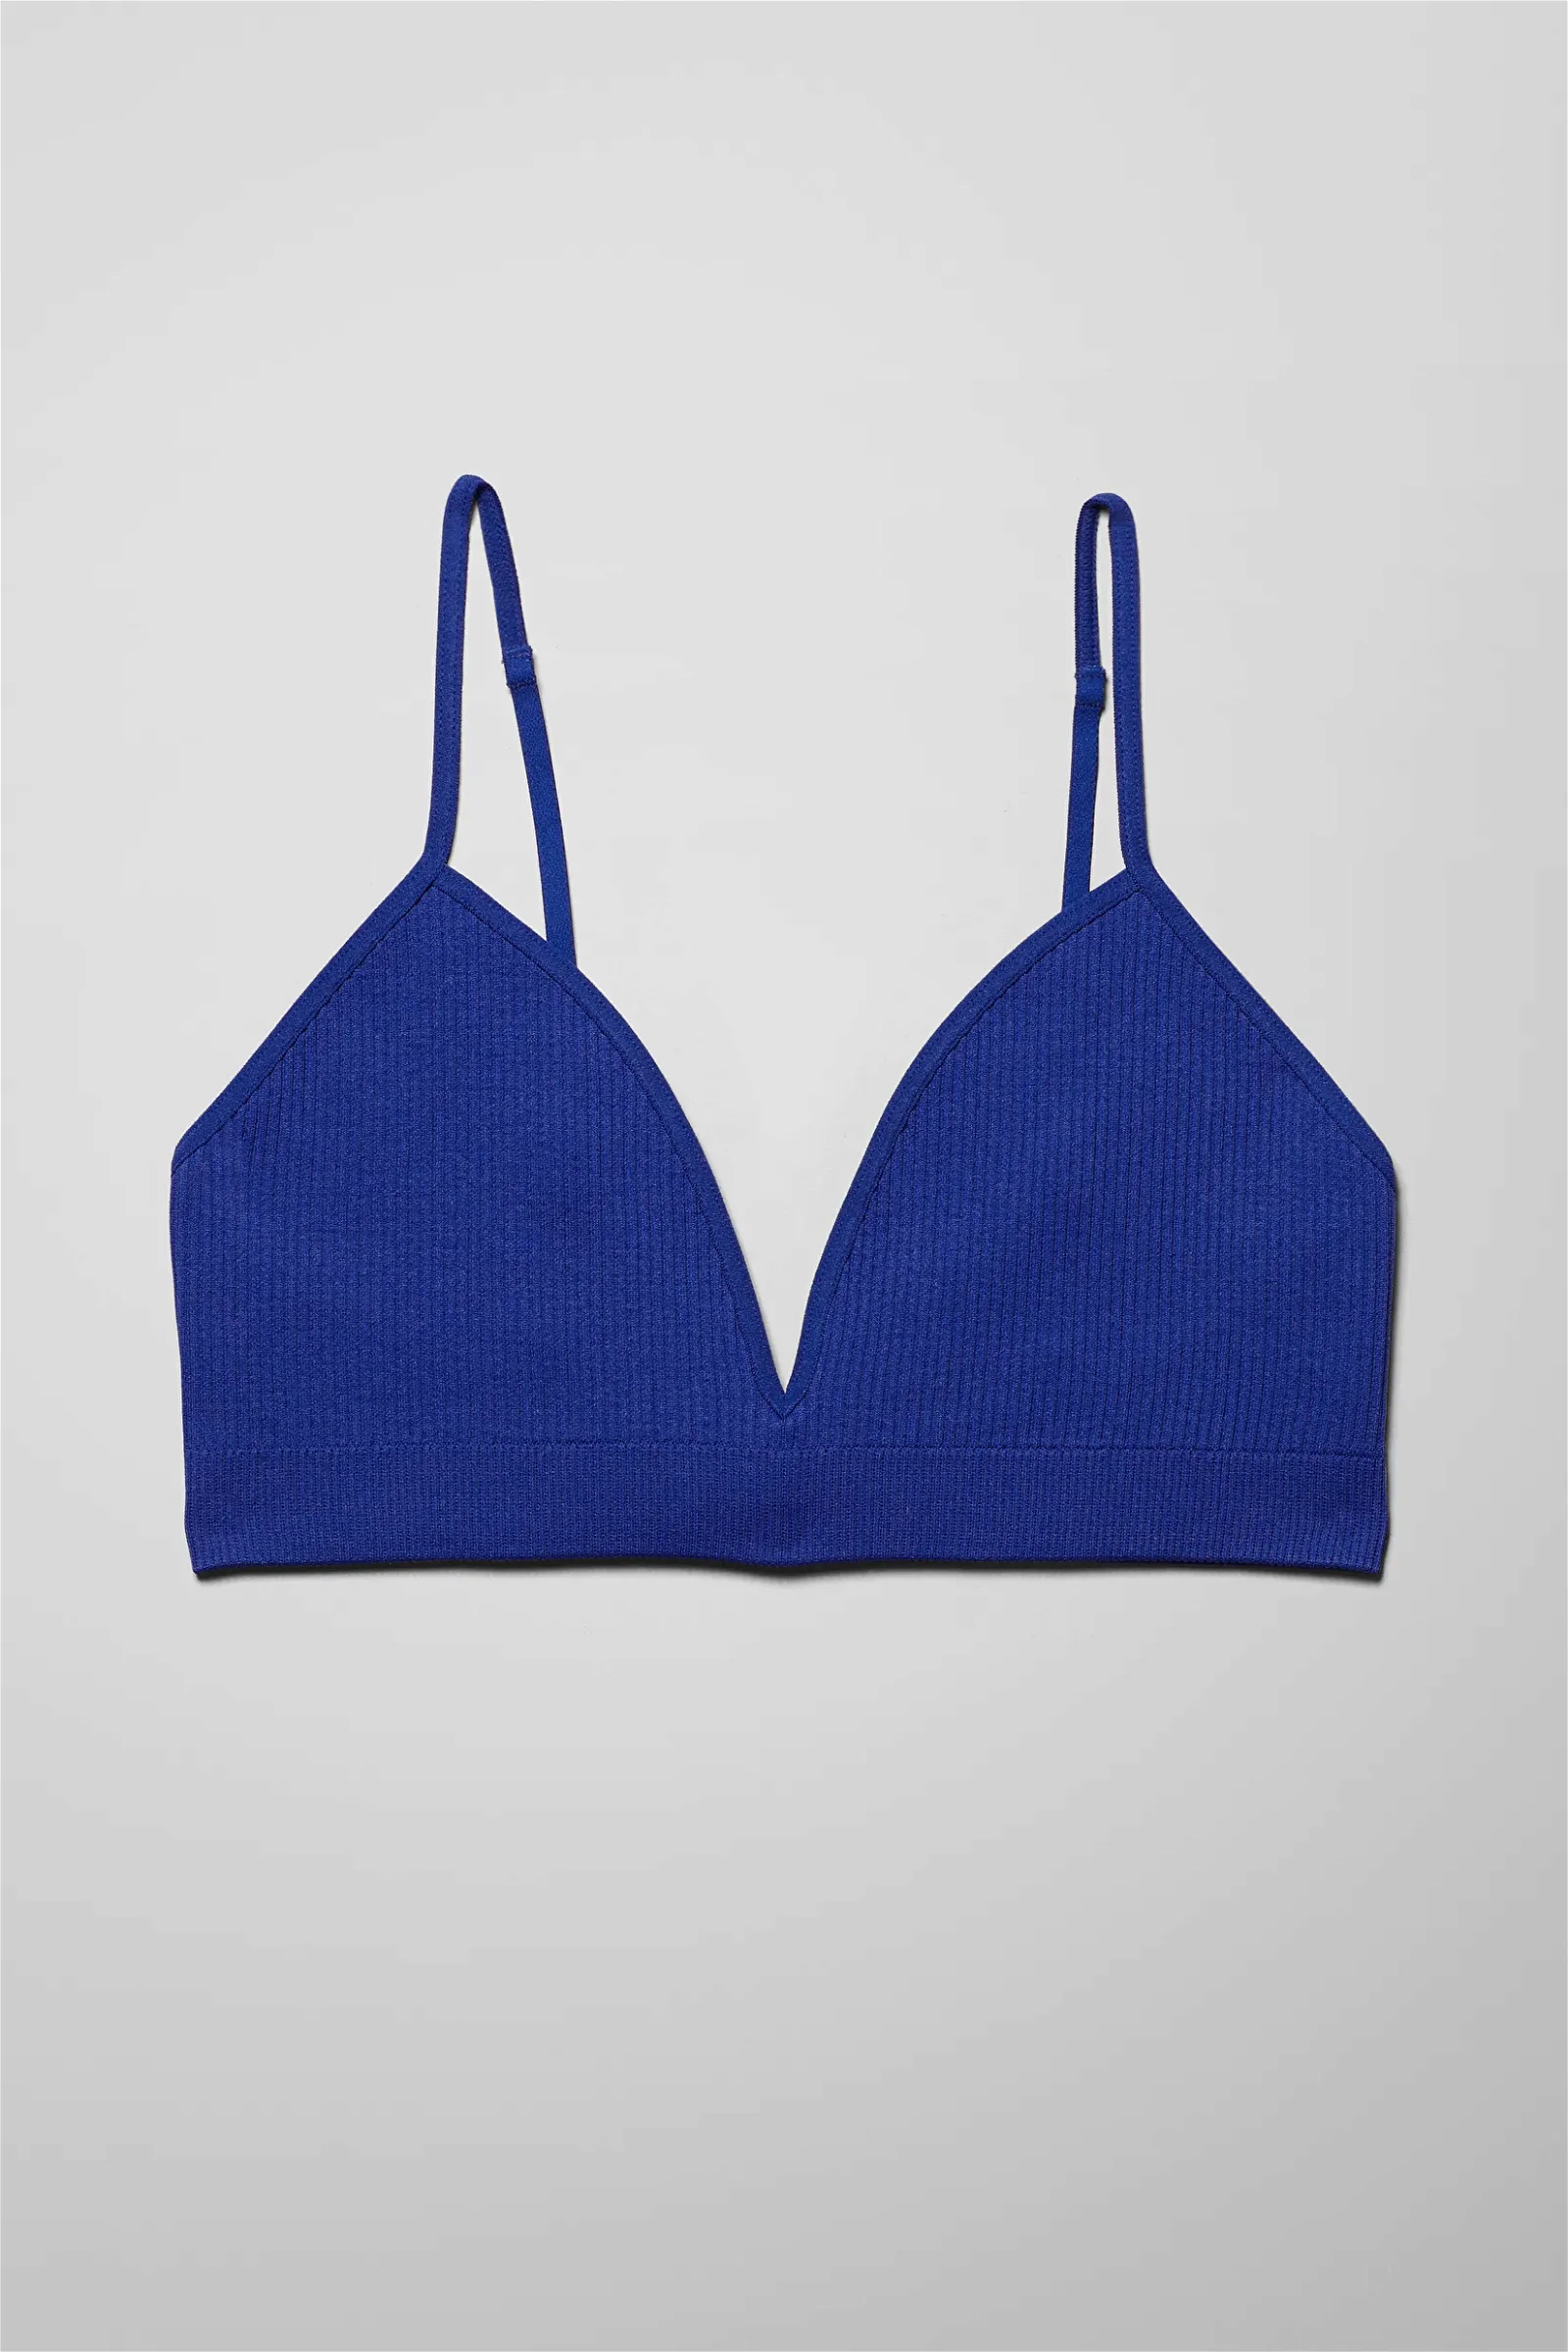 Weekday Cat triangle bra in blue